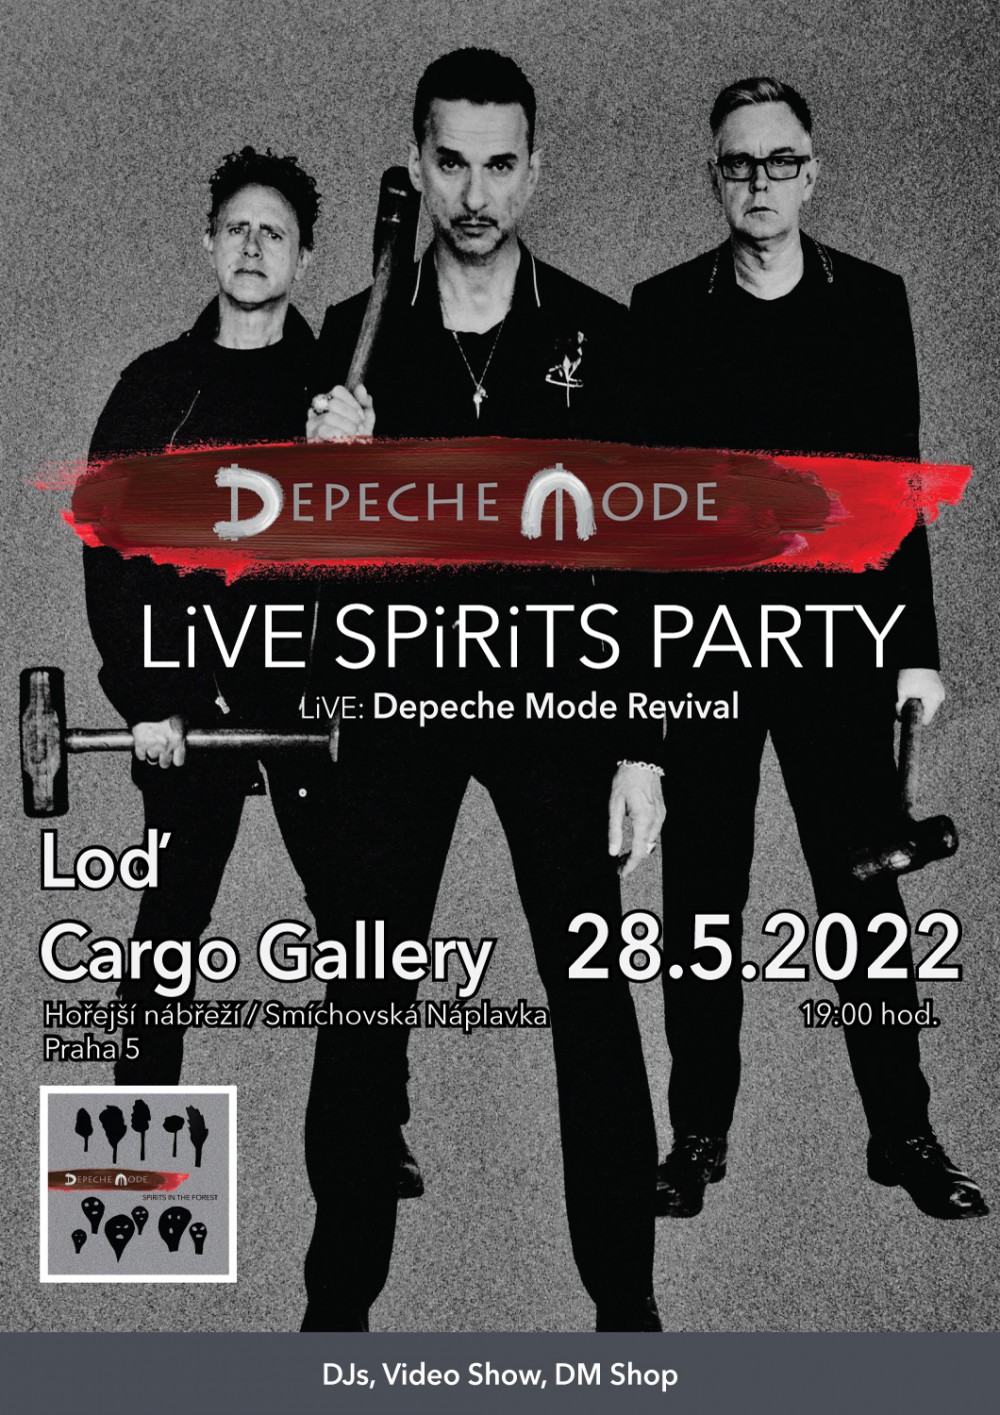 Plagát akcie: Depeche Mode LiVE SPiRiTS Party